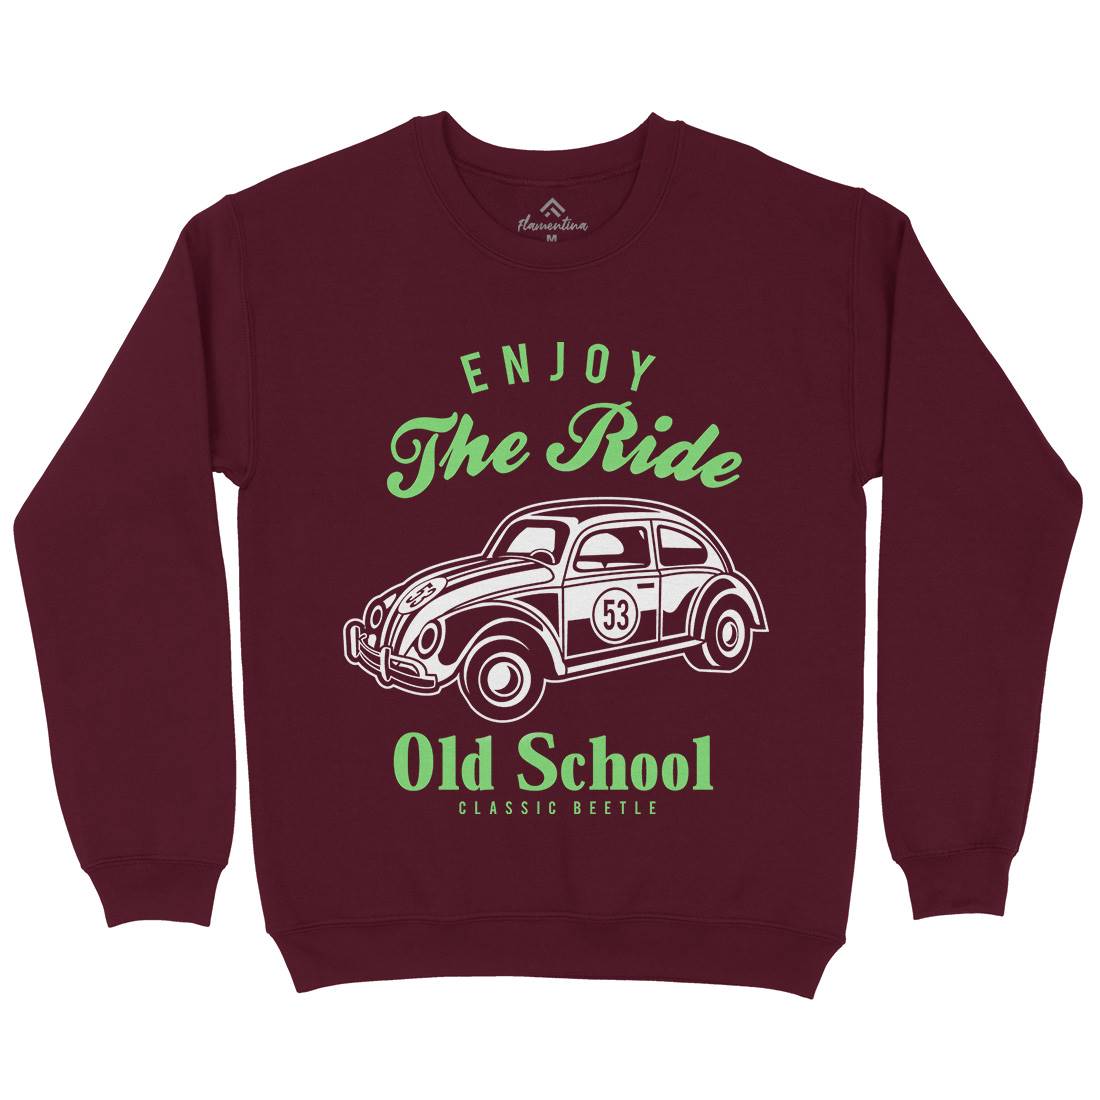 Enjoy The Ride Kids Crew Neck Sweatshirt Cars A047